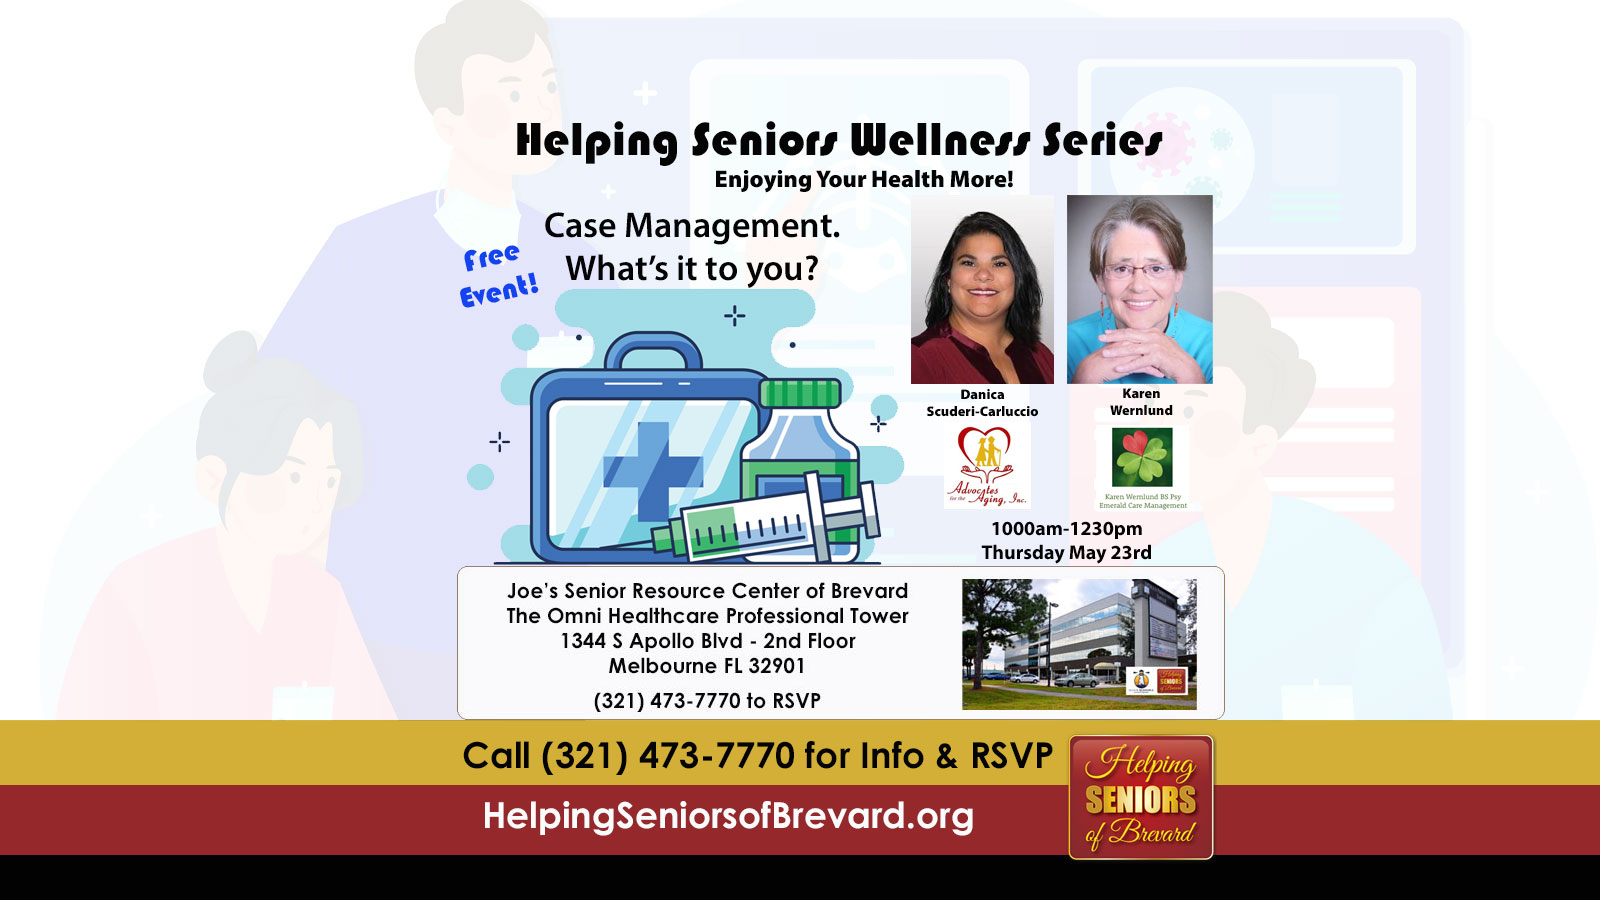 Helping Seniors Wellness Series - Case Management